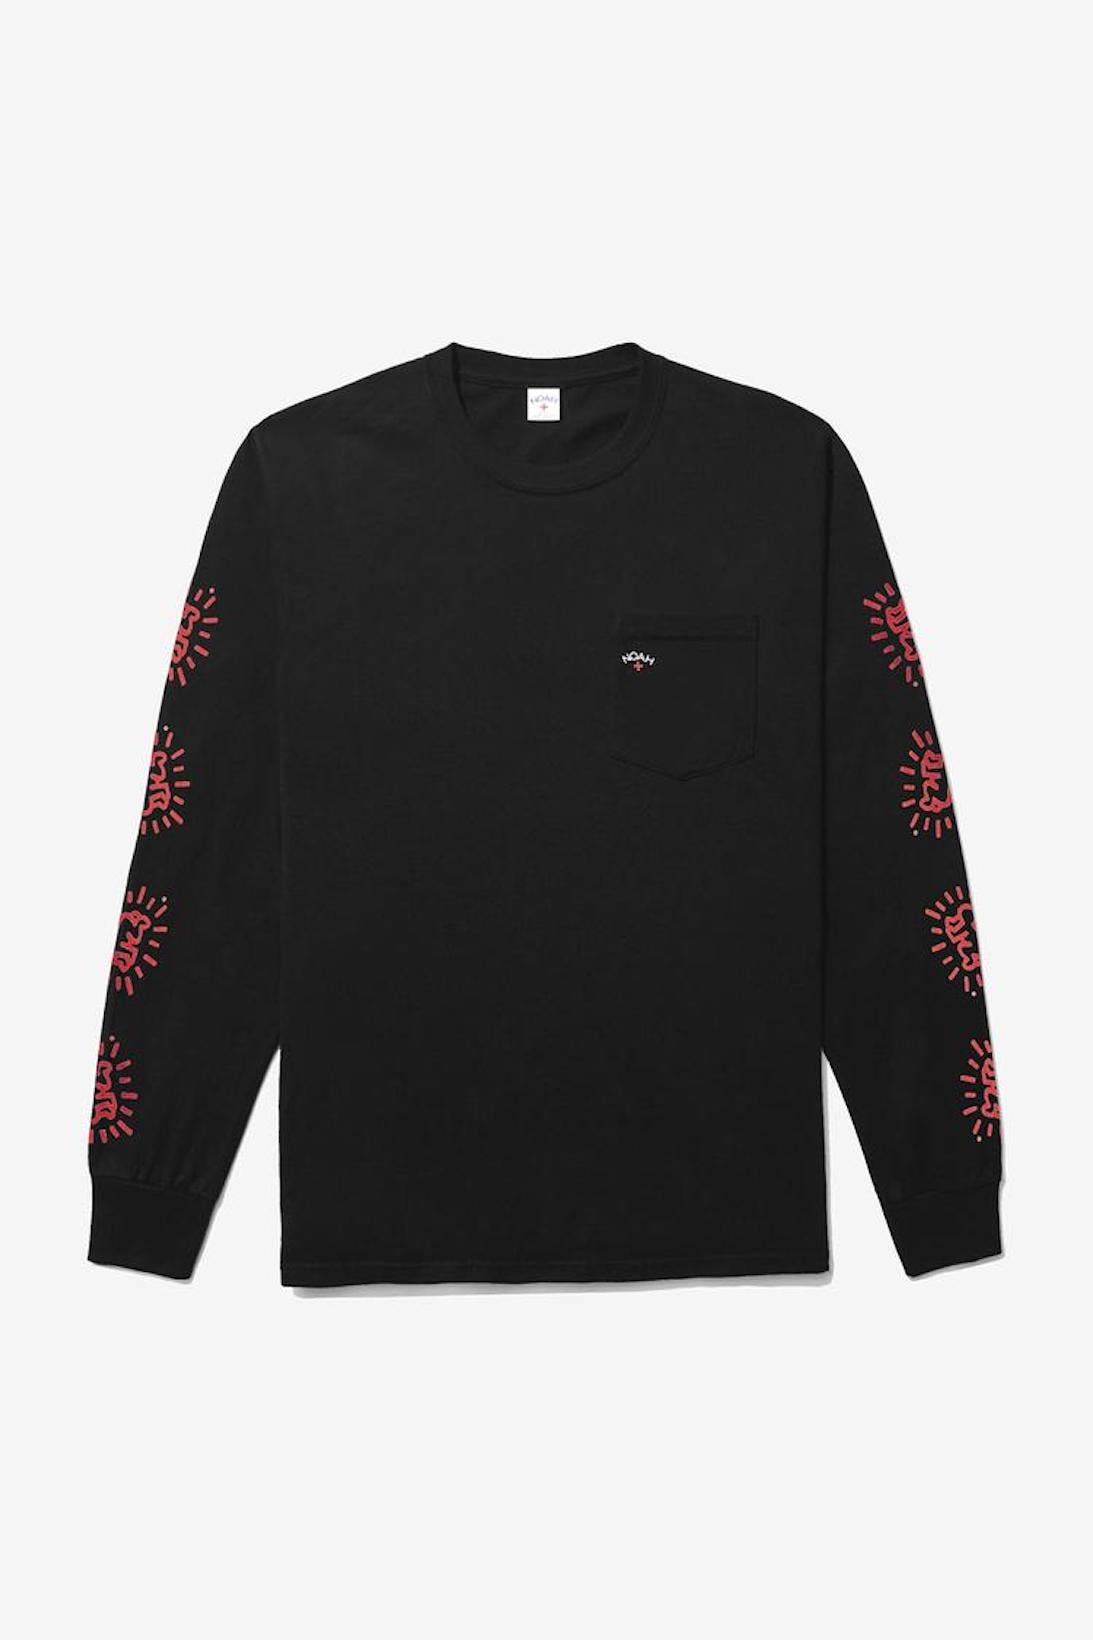 NOAH Keith Haring Christmas Collaboration Collection Sweatshirt Front